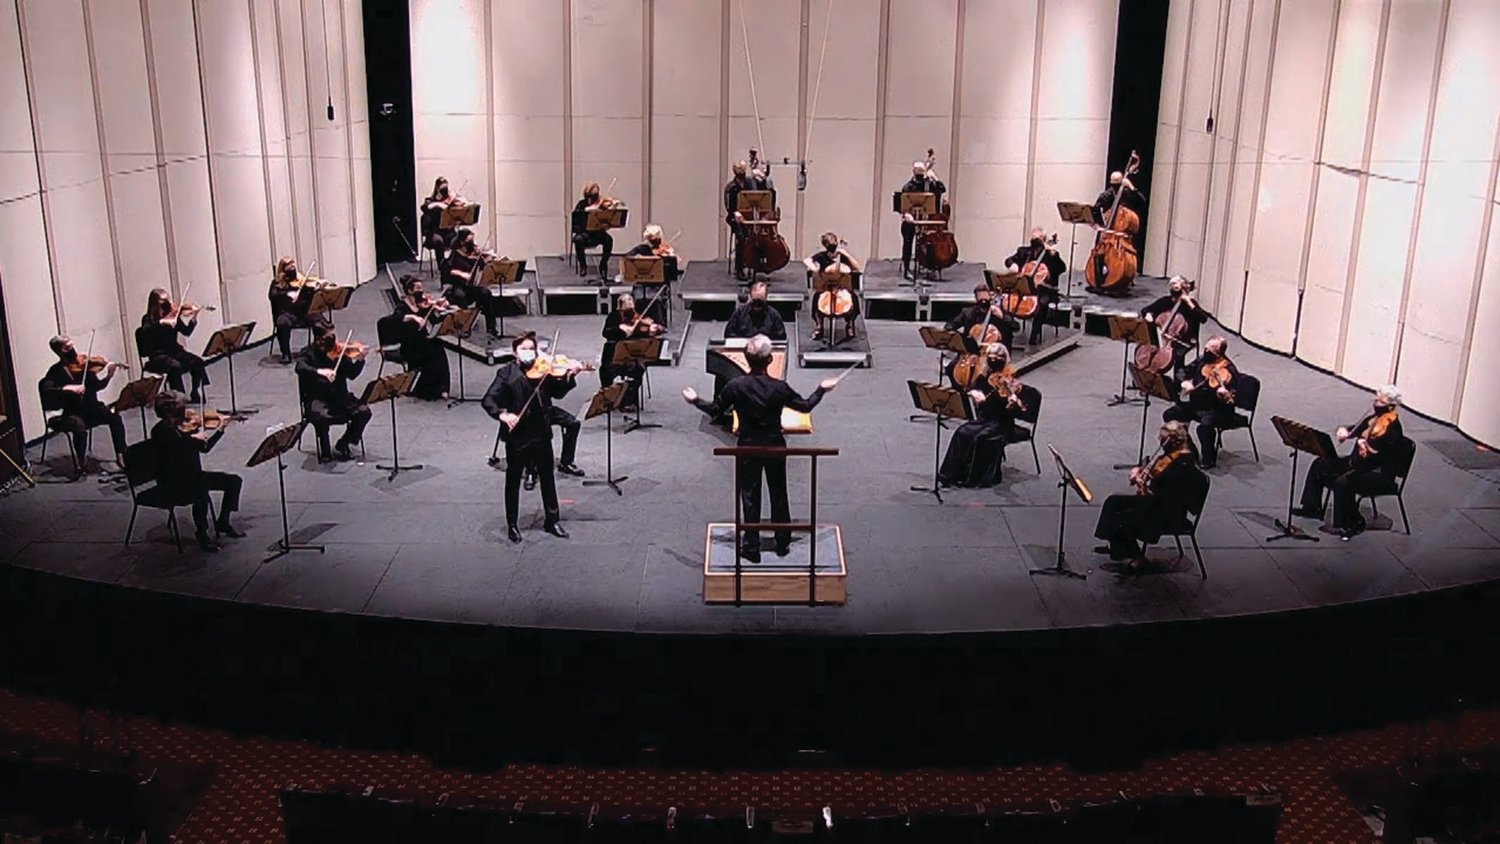 Rhode Island Philharmonic Orchestra